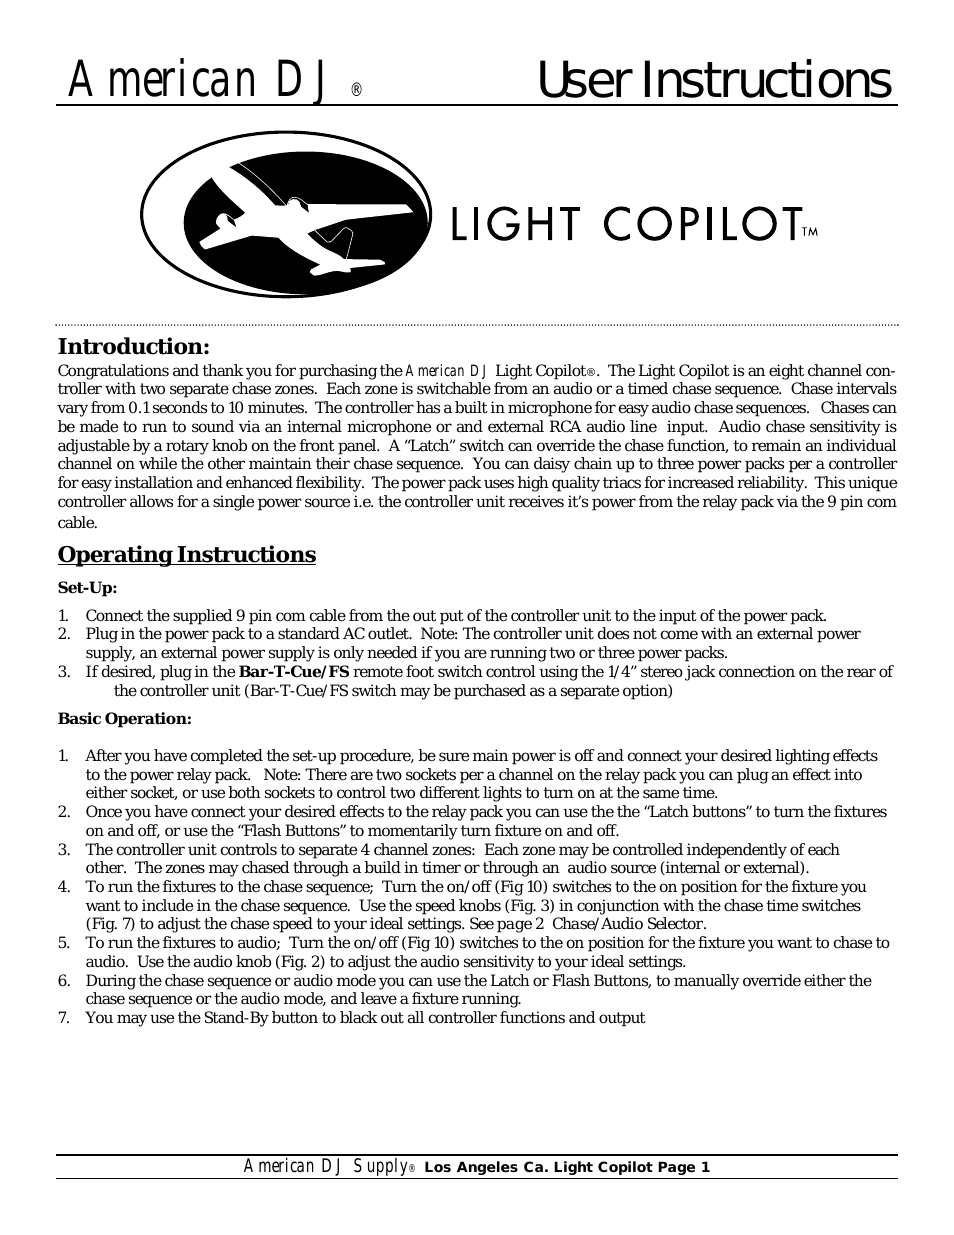 Light Copilot